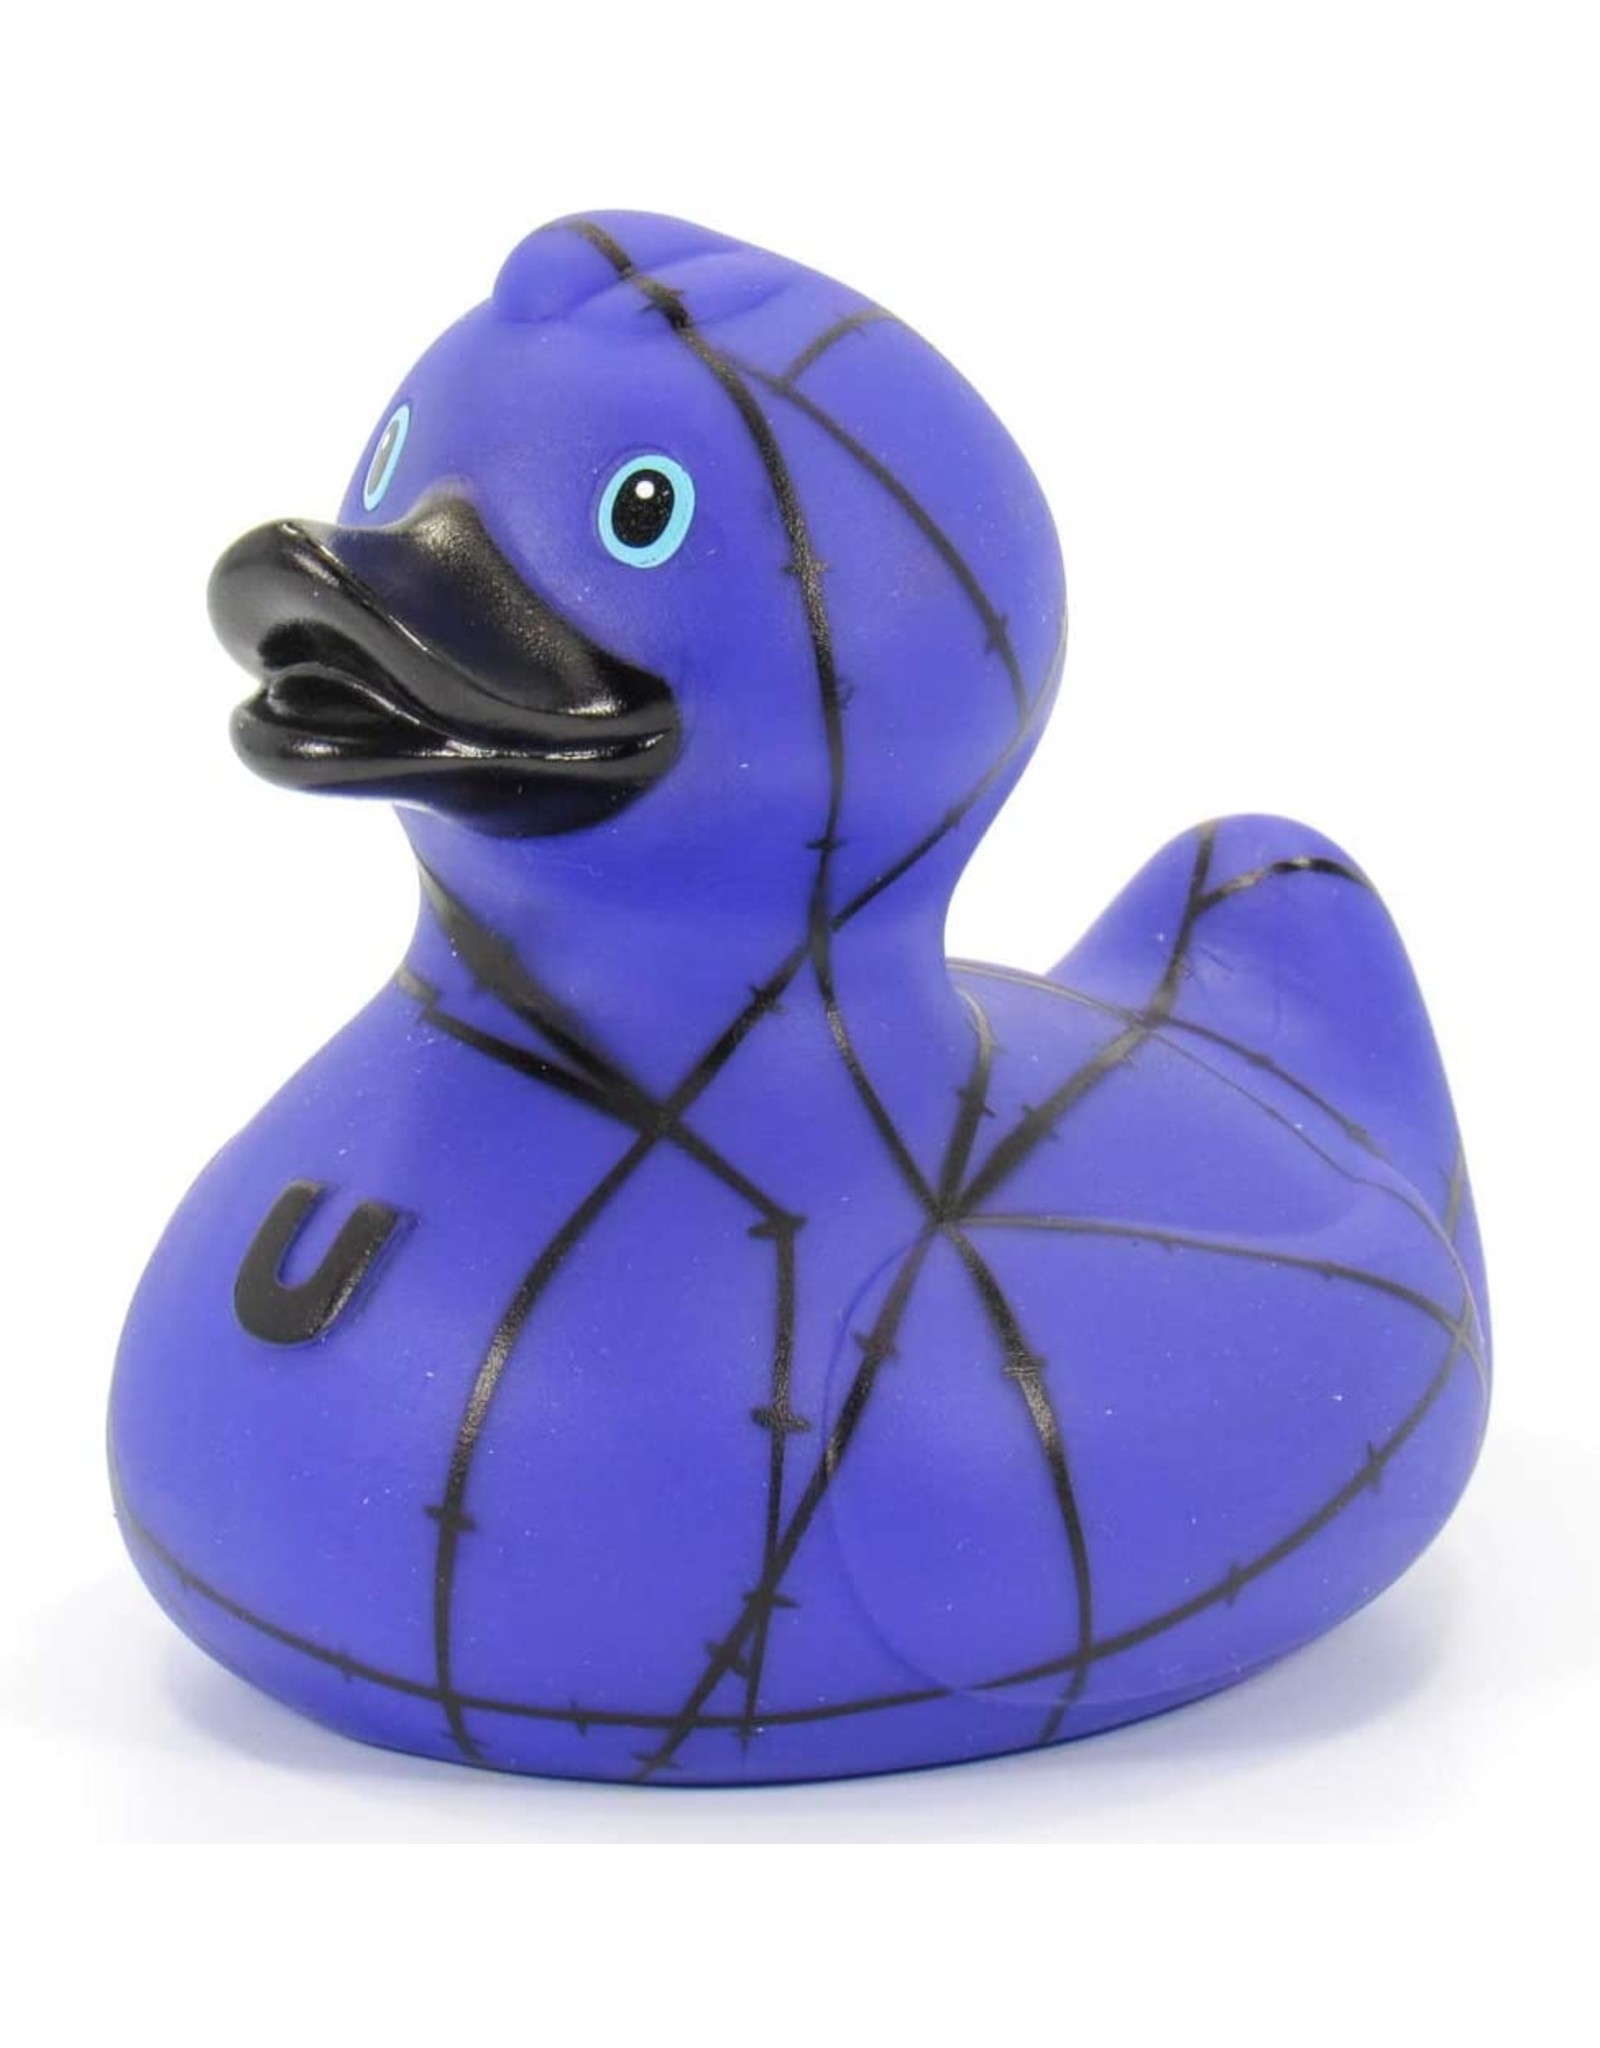 Gothic Rubber Duck